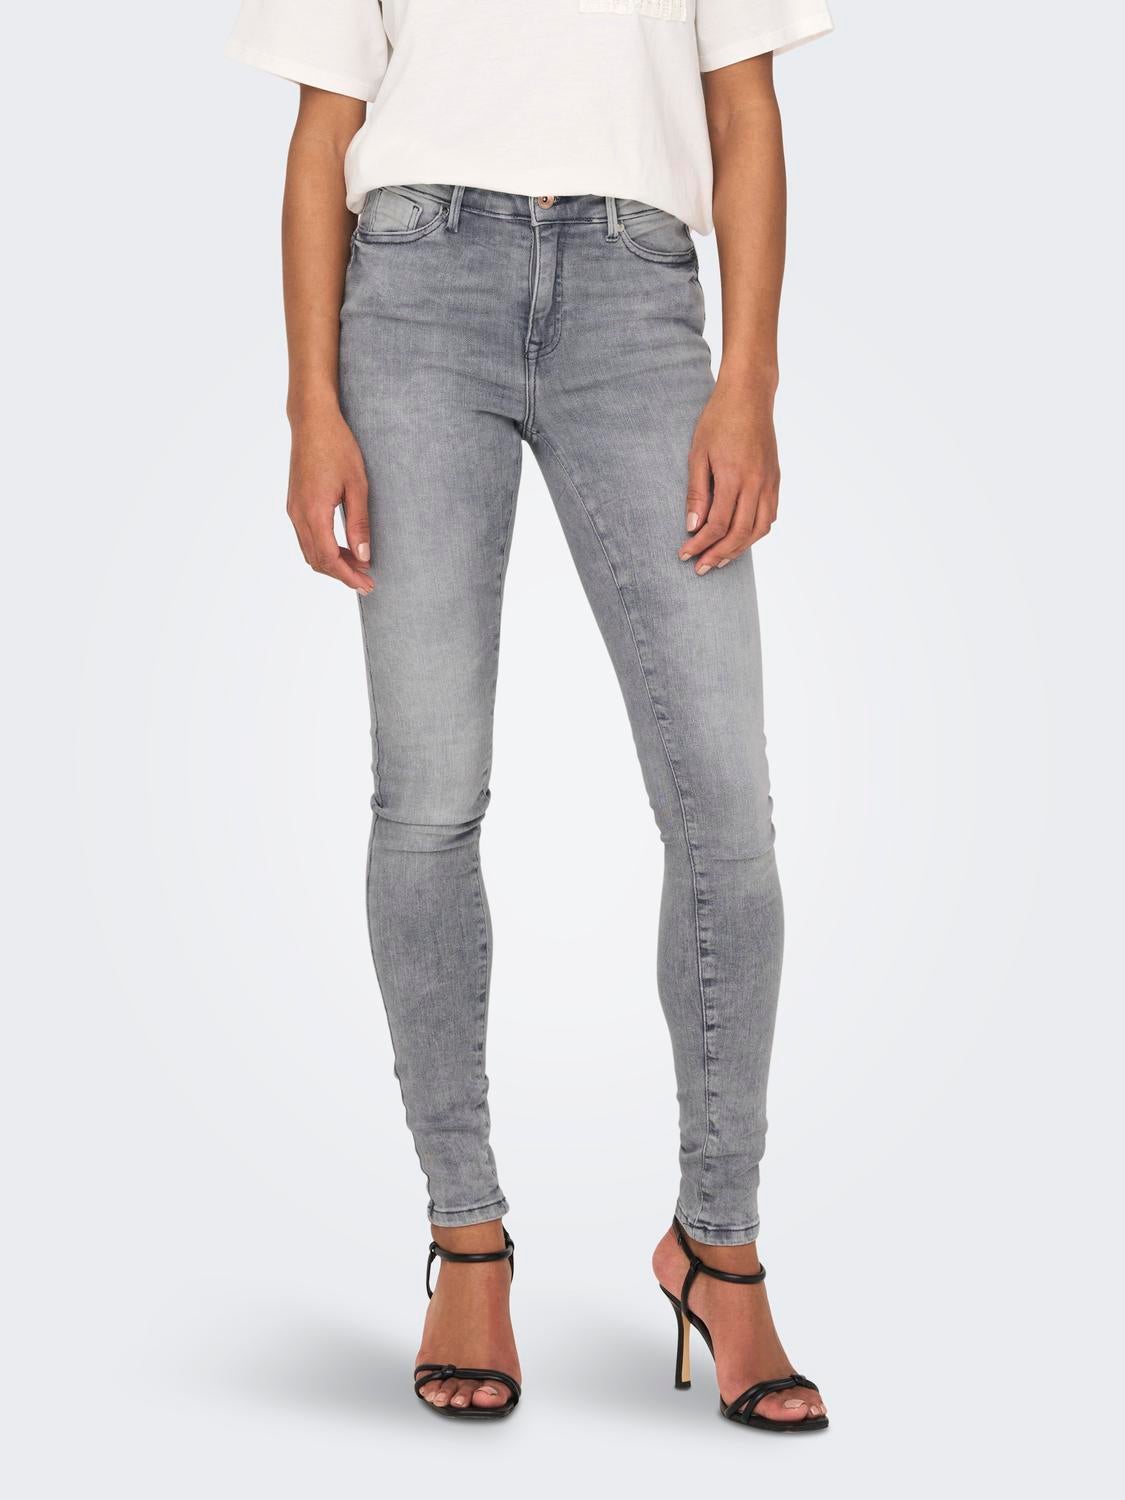 Mavi Skinny Jeans hellgrau Jeans-Optik Mode Jeans Skinny Jeans 